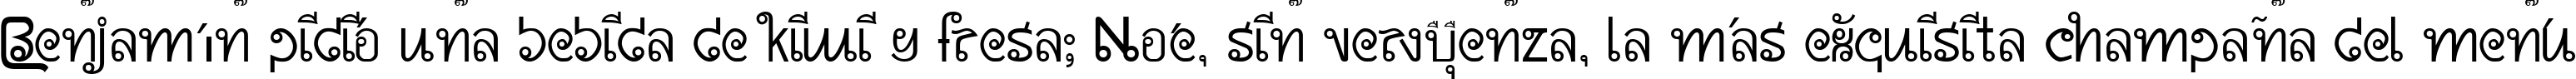 Пример написания шрифтом AW_Siam  English not Thai текста на испанском